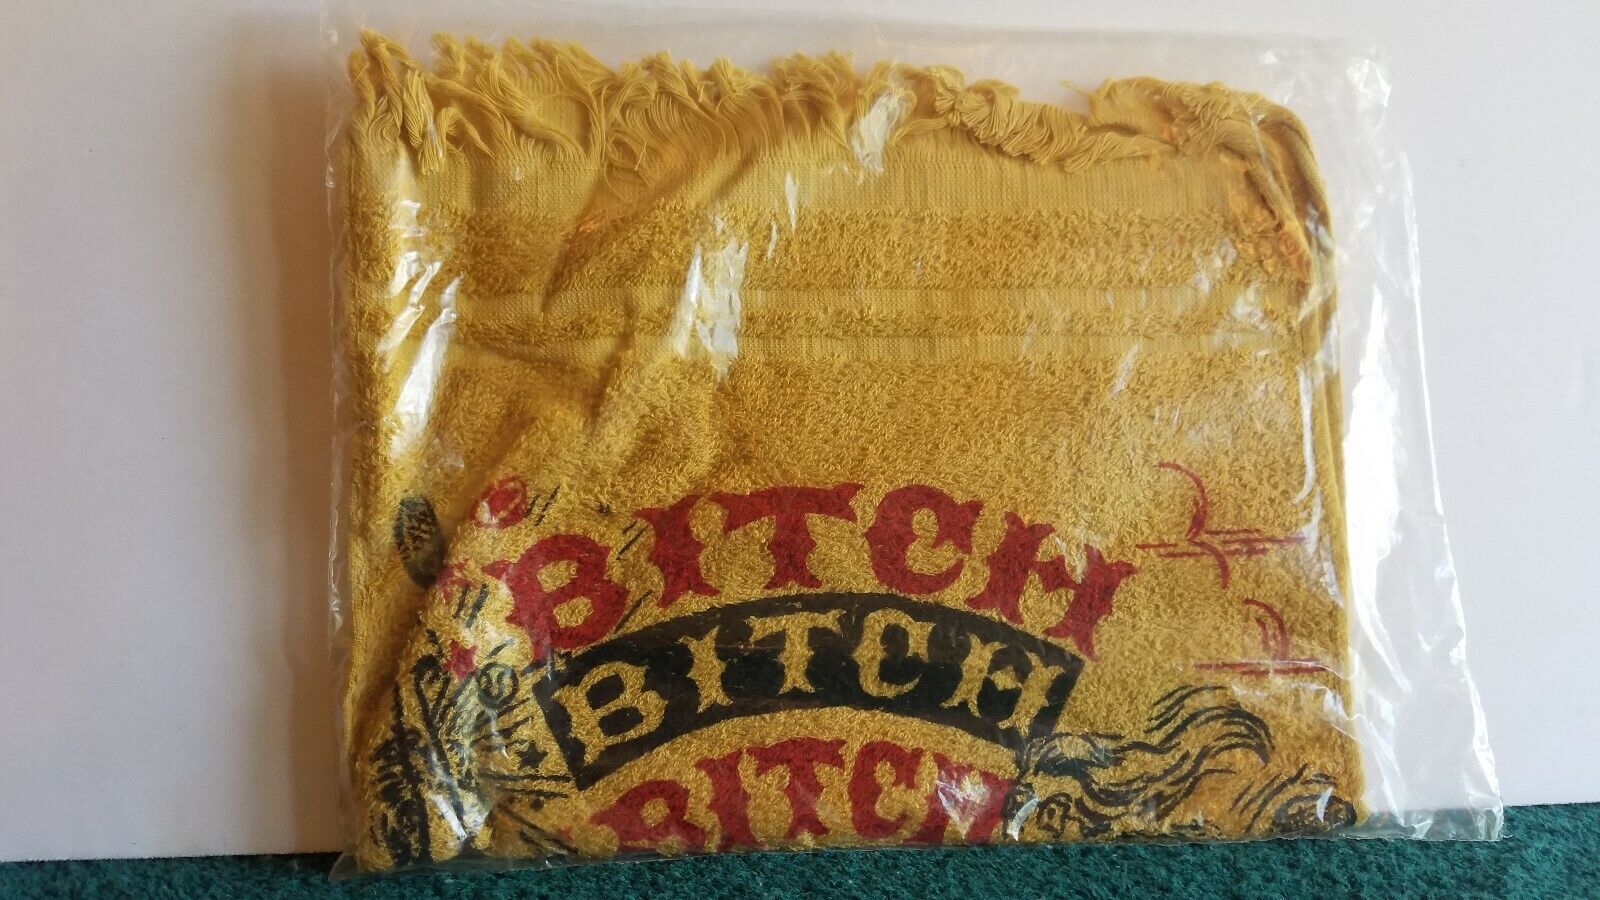 NOS Vtg Bitch Bitch Bitch Humorous Tennis Towel Novelty USA Sealed New Tan K4